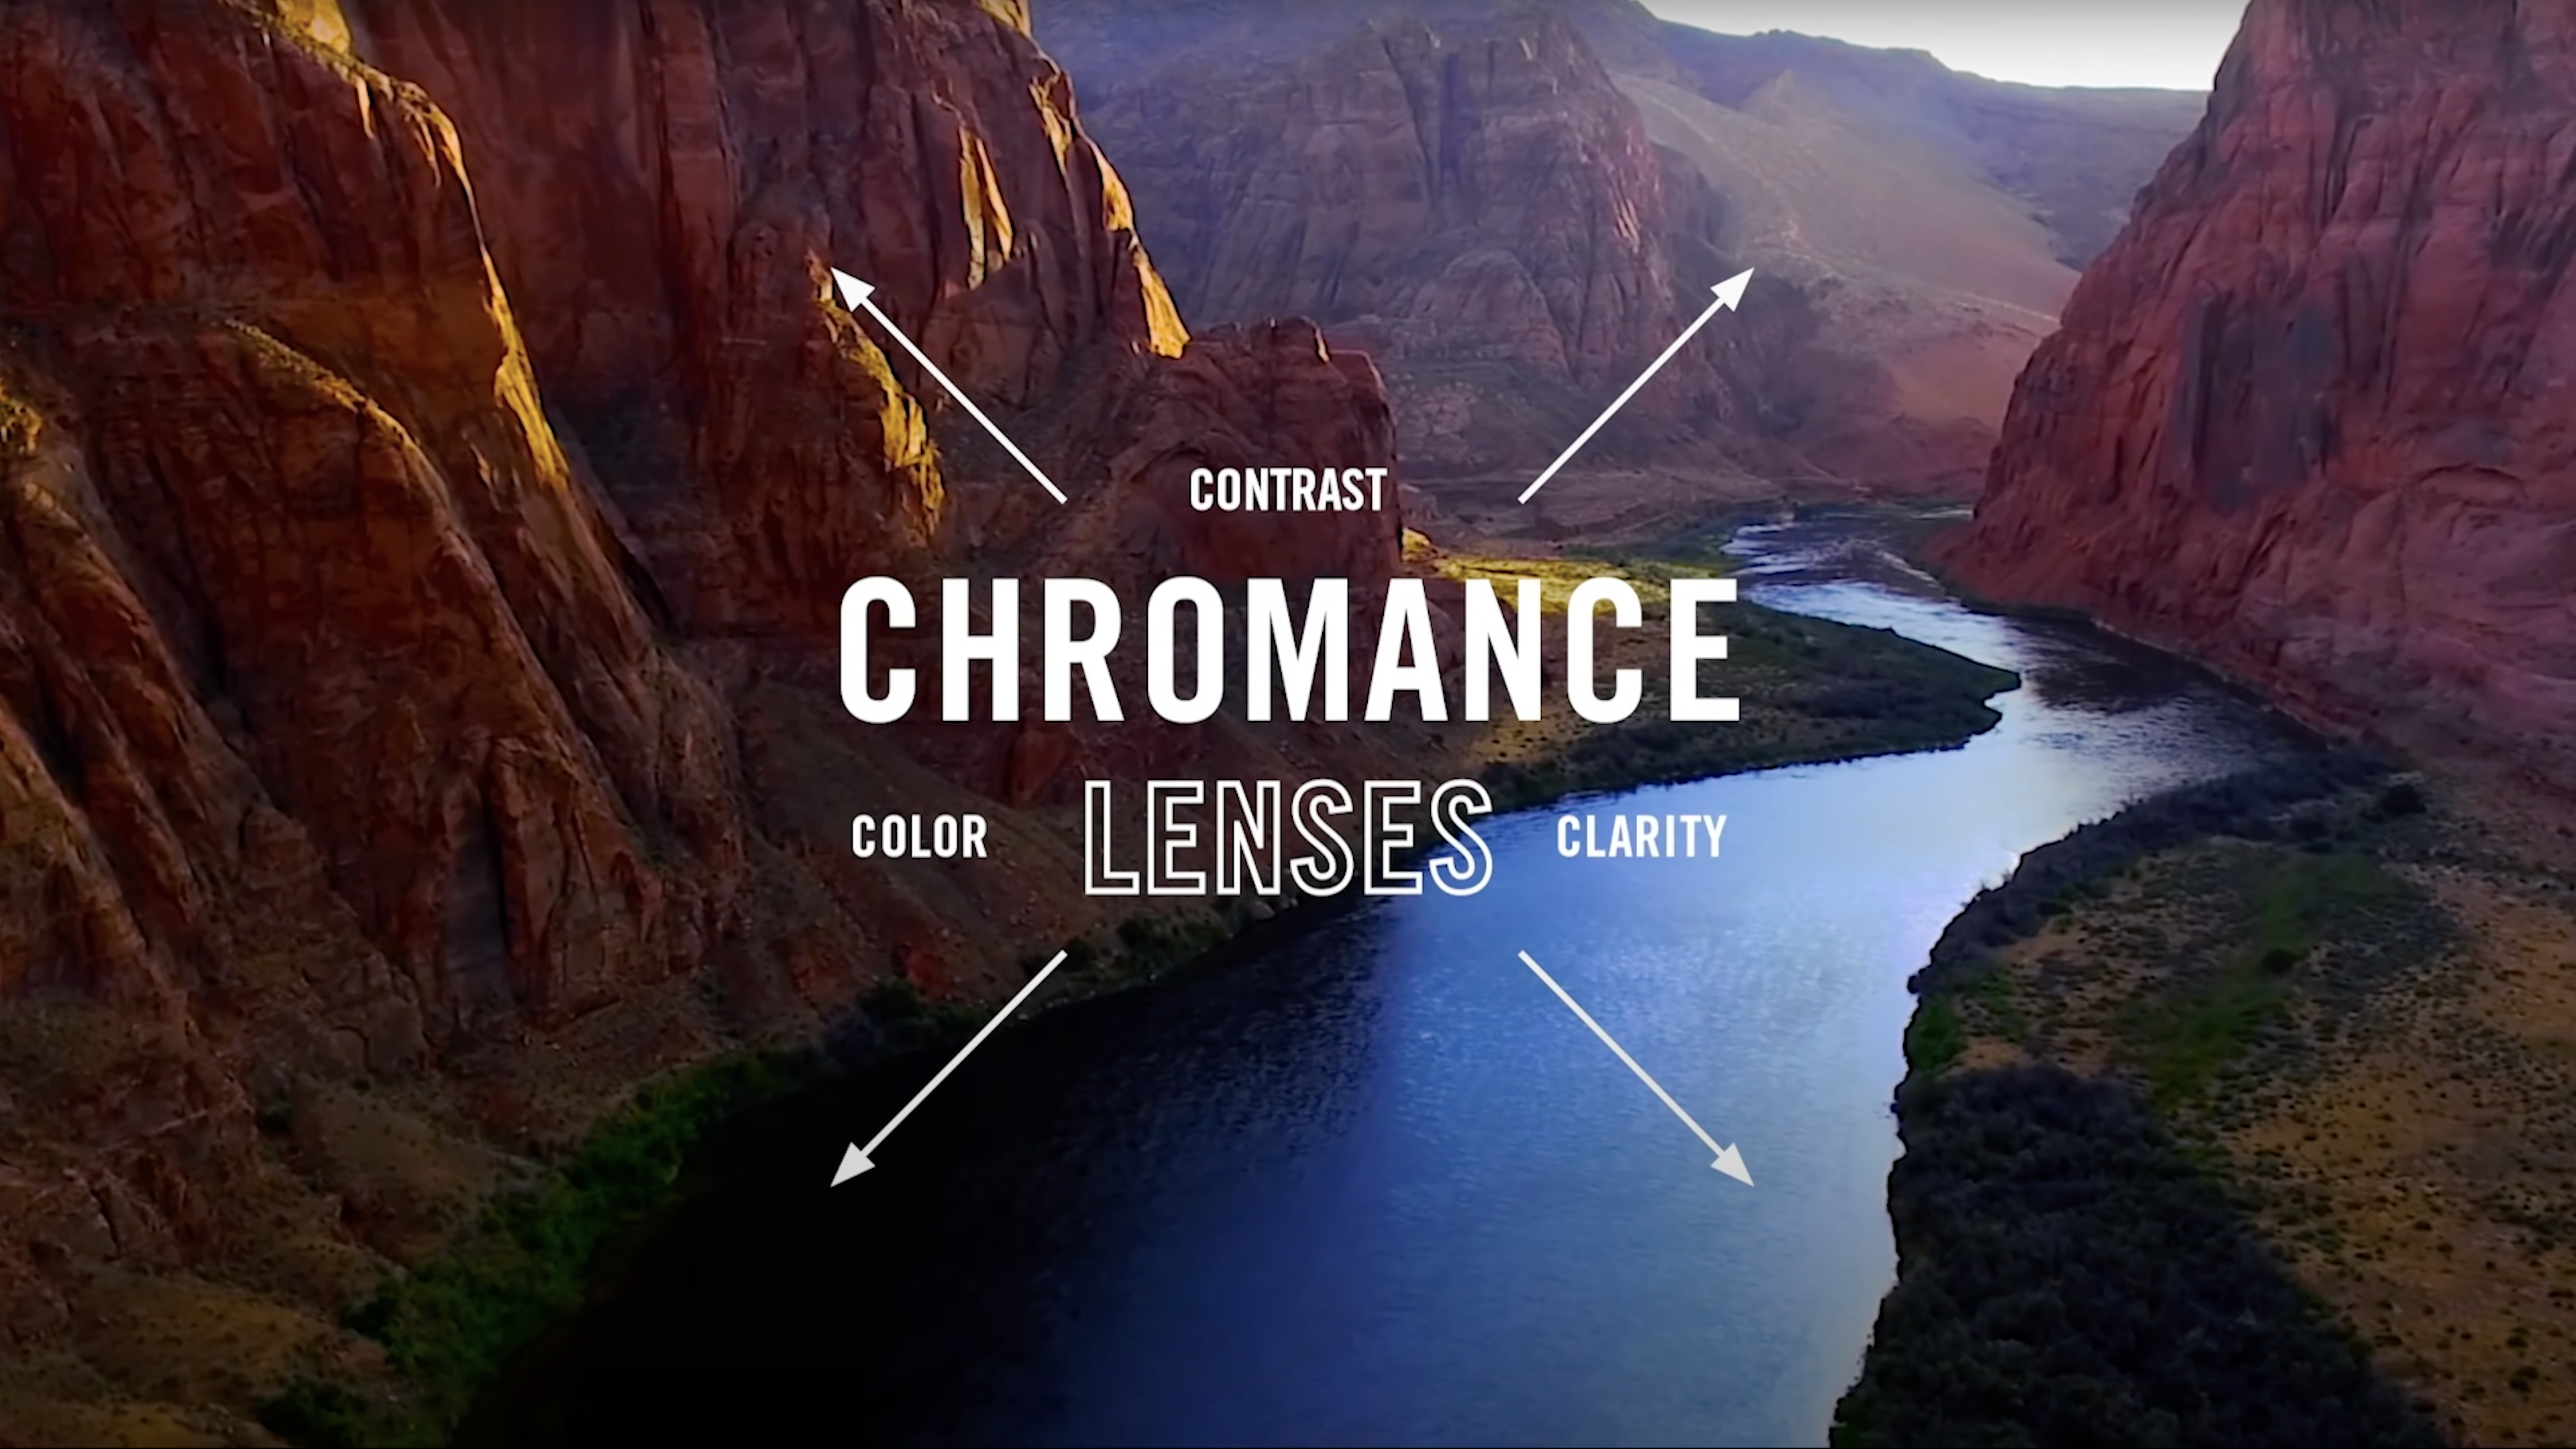 Ray-Ban Chromance Lens Technology | SportRx